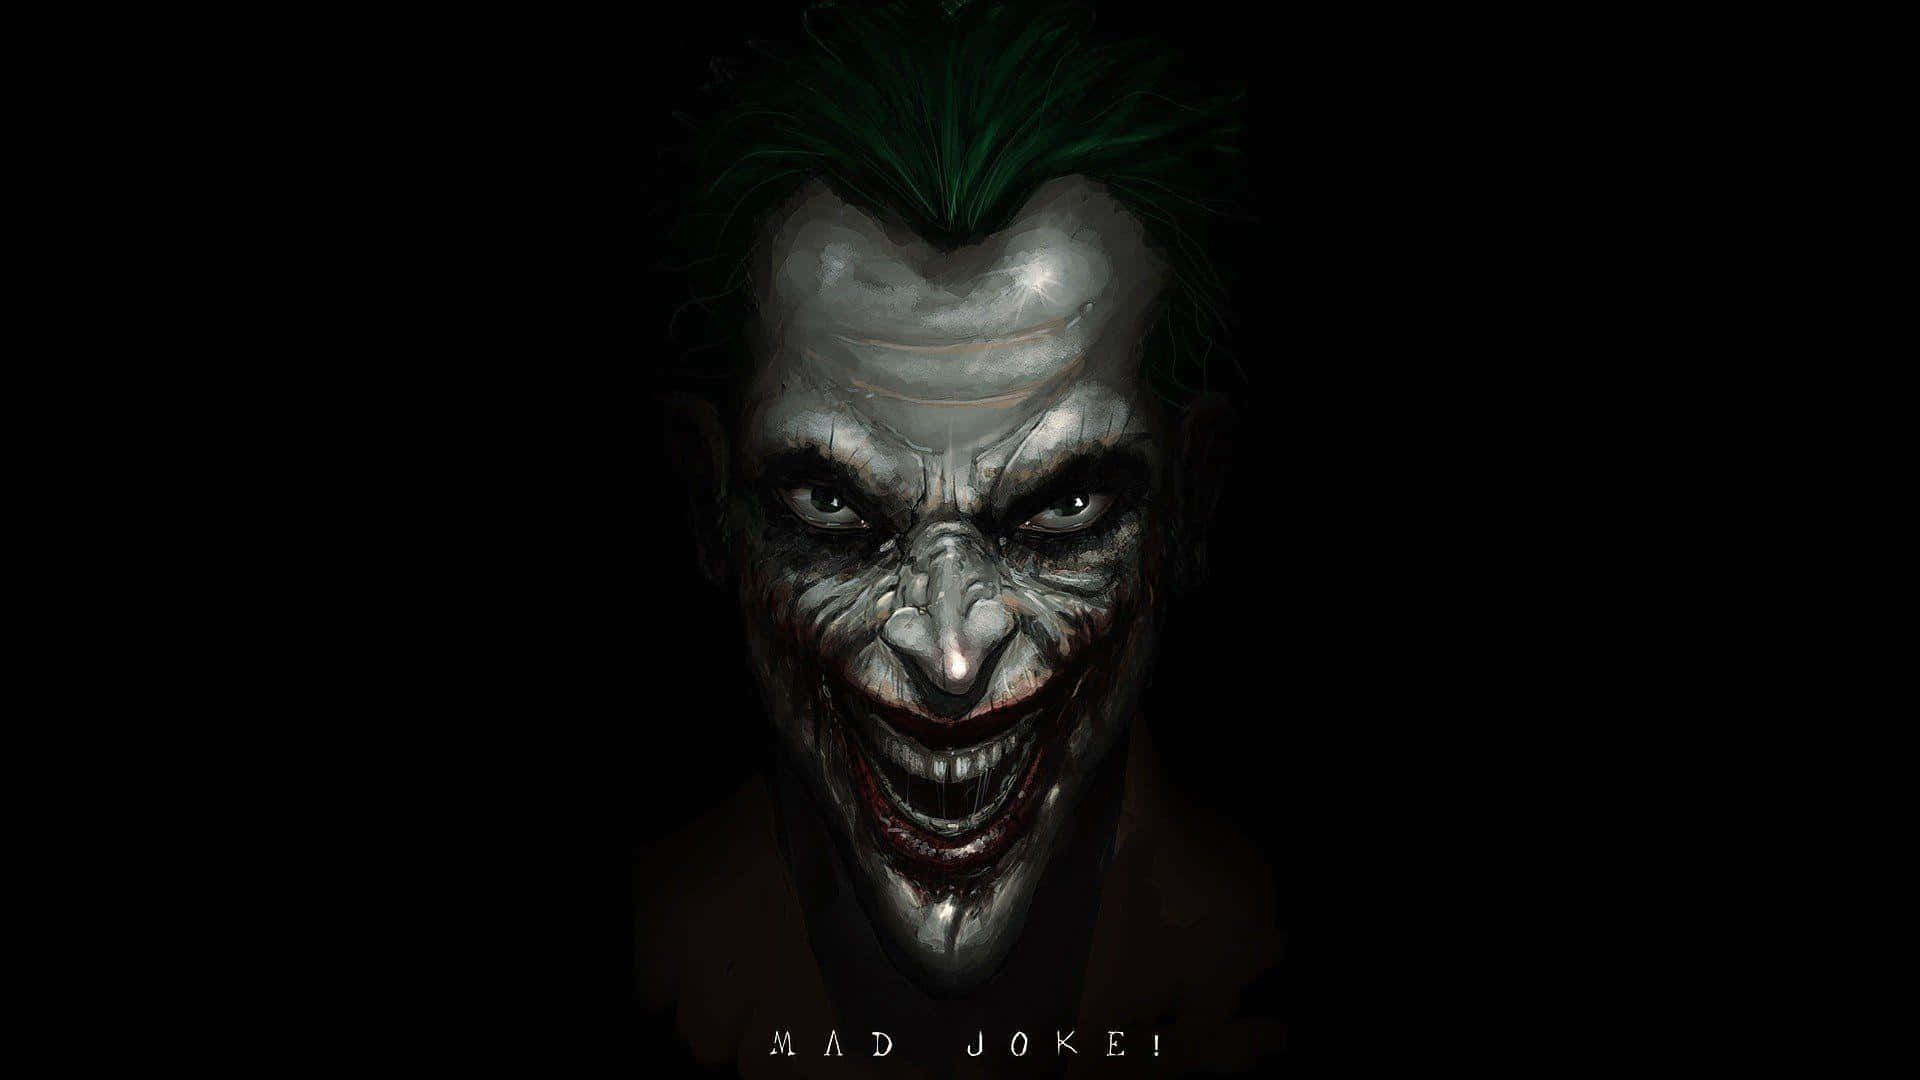 Joker's Maniacal Laughter In The Dark Background